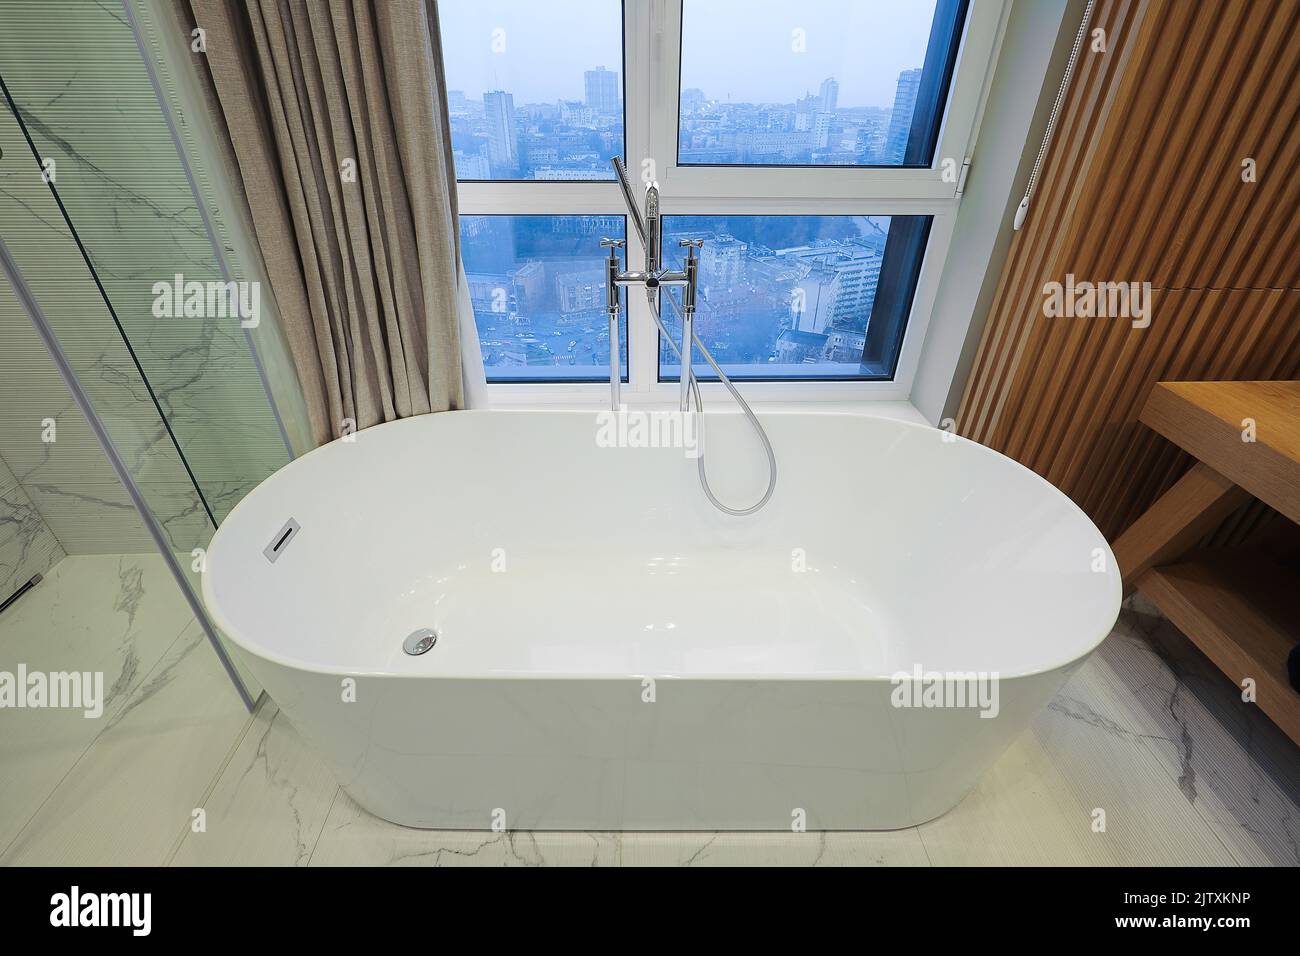 Freestanding white bathtub in the bathroom interior Stock Photo